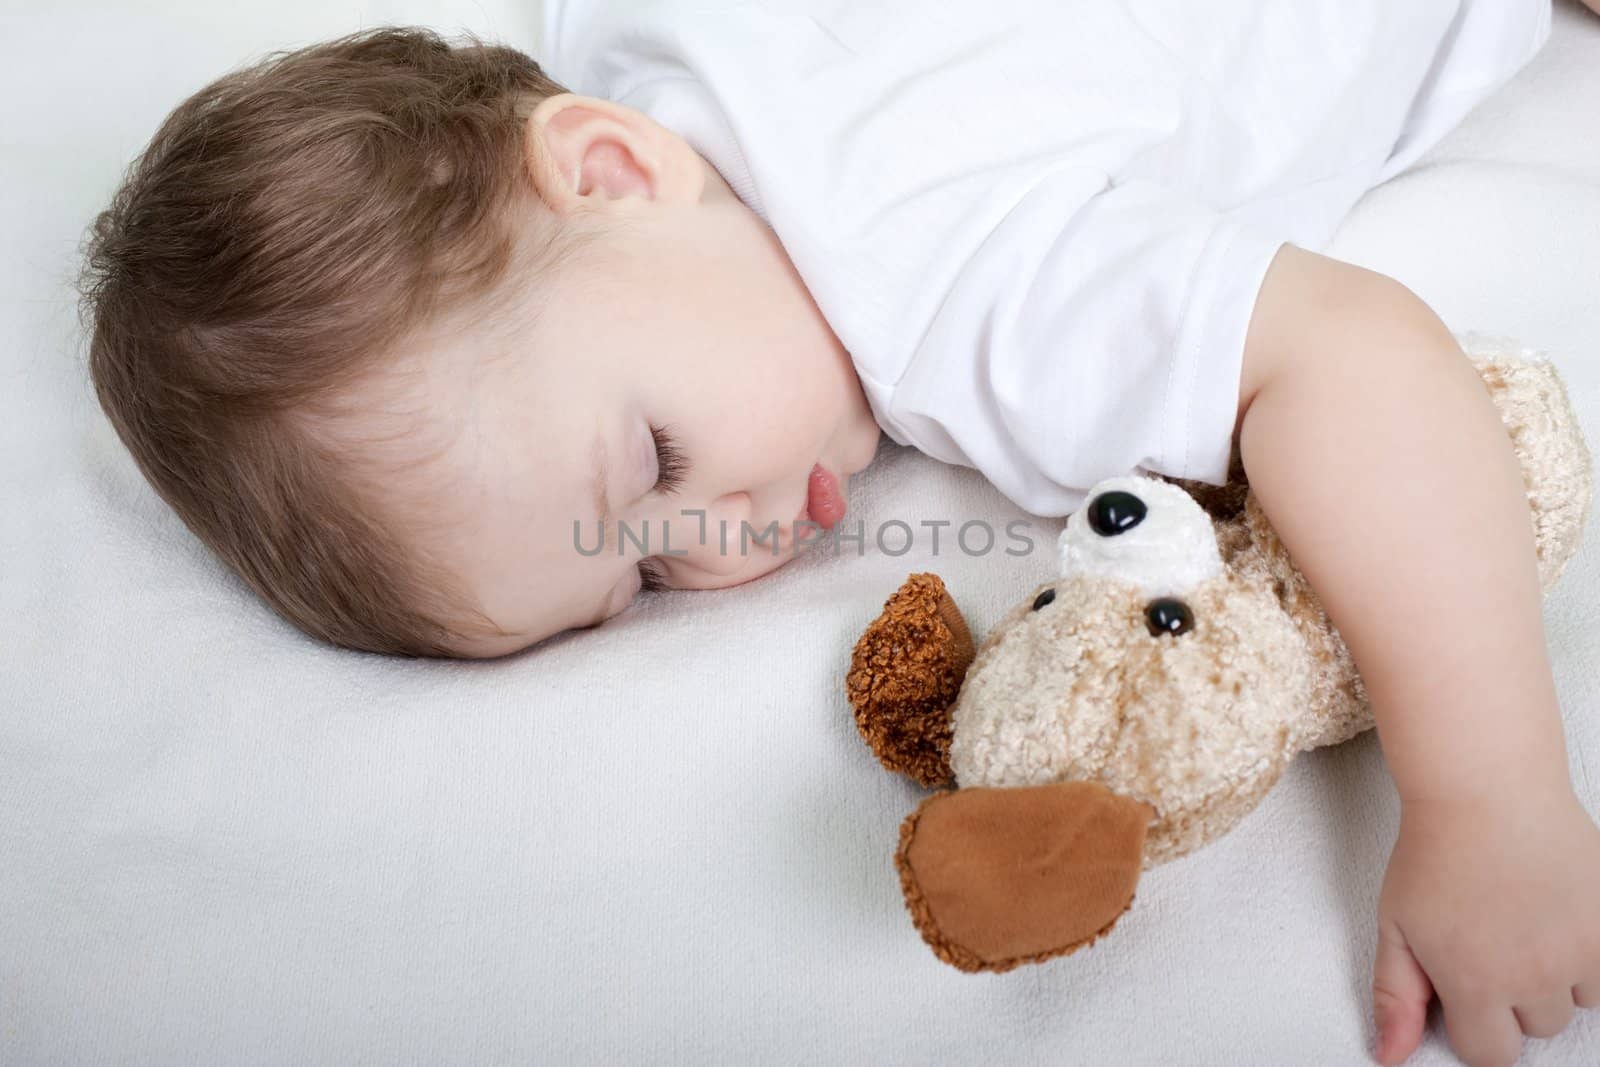 Little child sleeping by ia_64